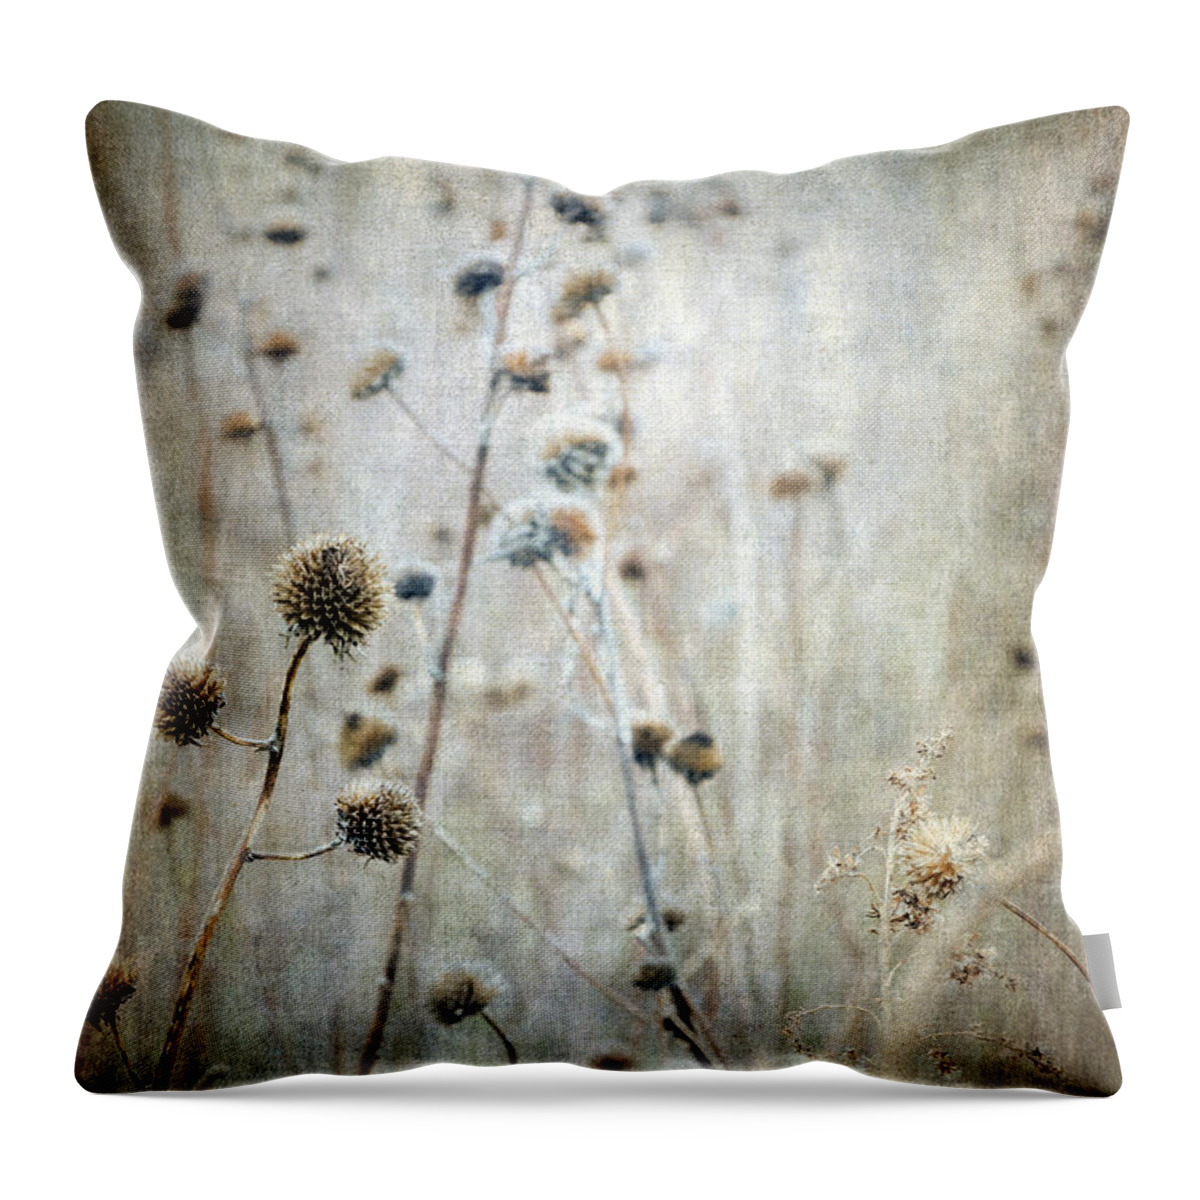 Autumn Throw Pillow featuring the photograph Autumn Seed Heads VI by Tamara Becker